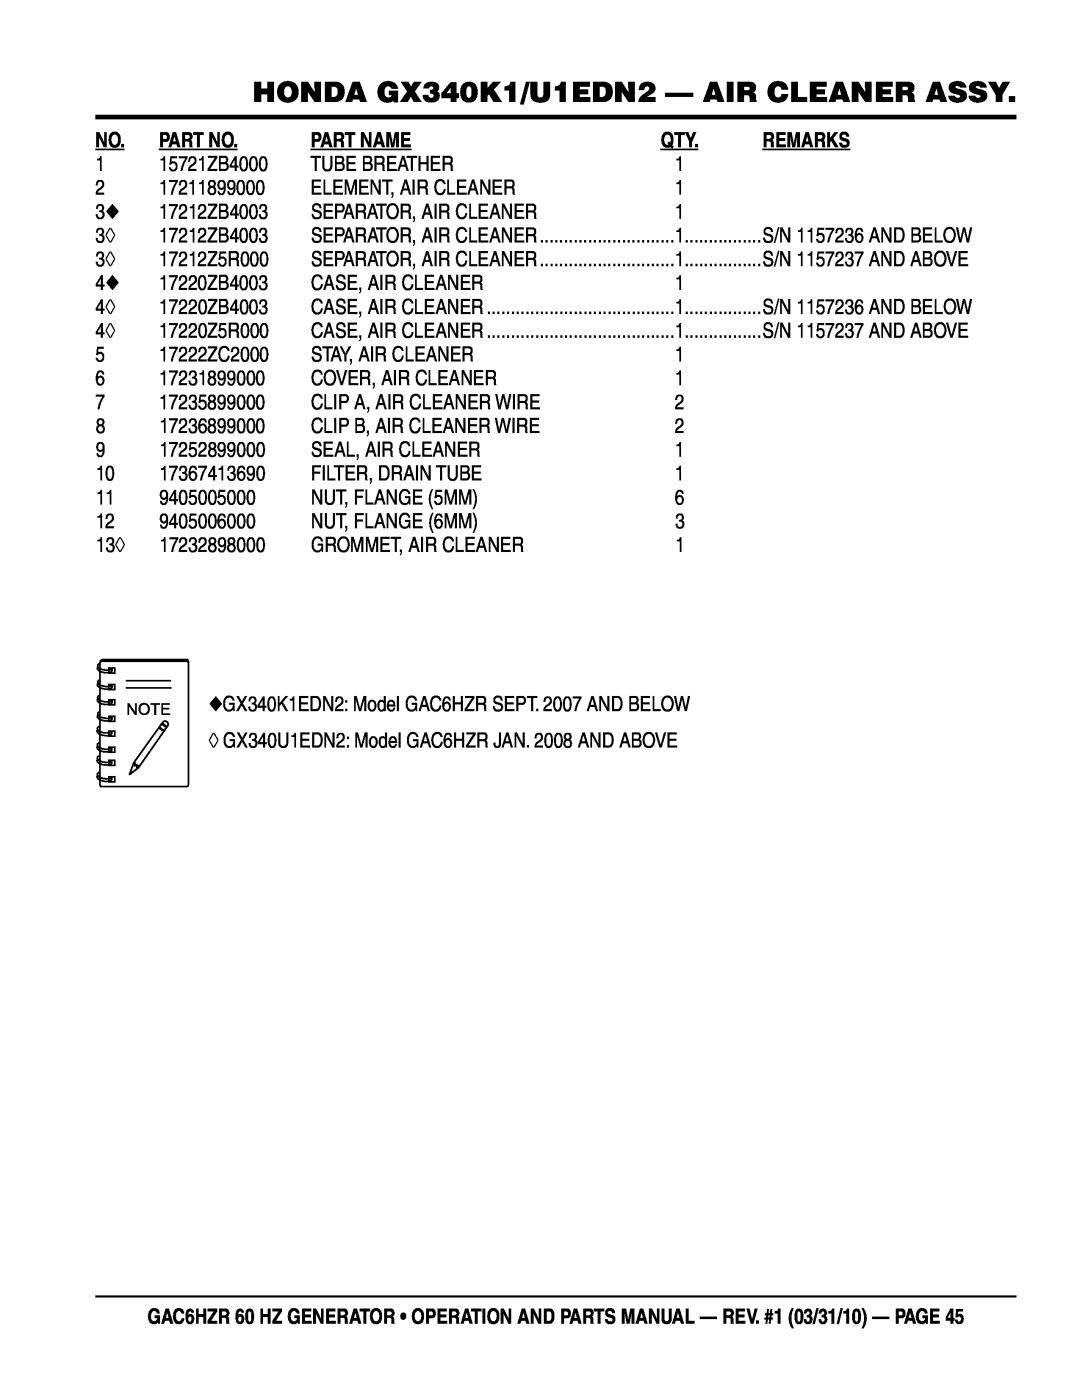 Multiquip GAC-6HZR manual HONDA GX340K1/U1EDN2 - AIR CLEANER ASSY, Part Name, Remarks 